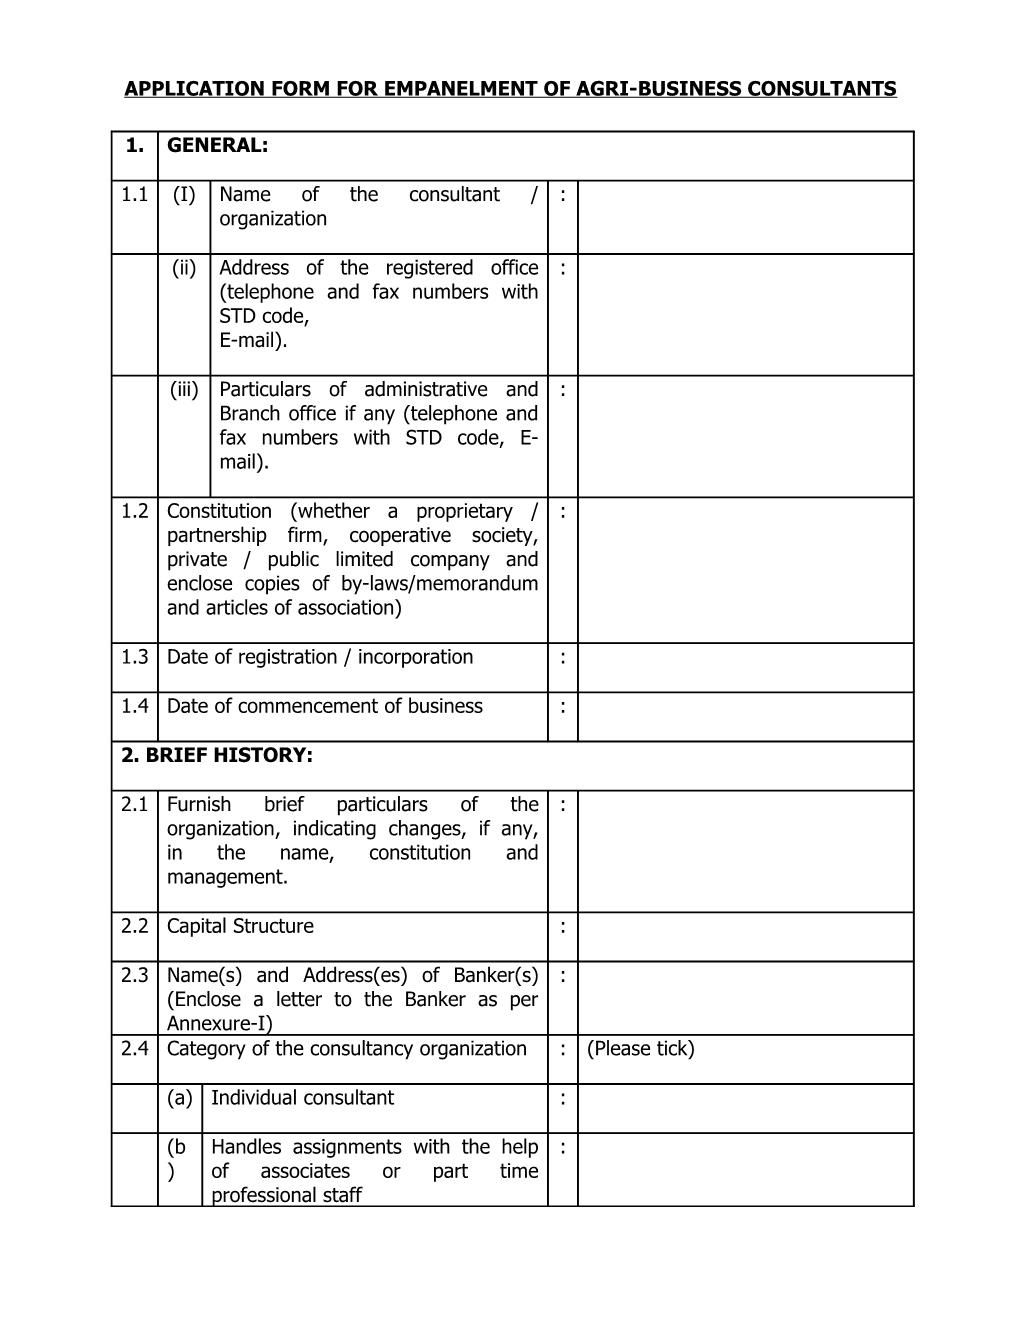 Application Form for Empanelment of Agri-Business Consultants